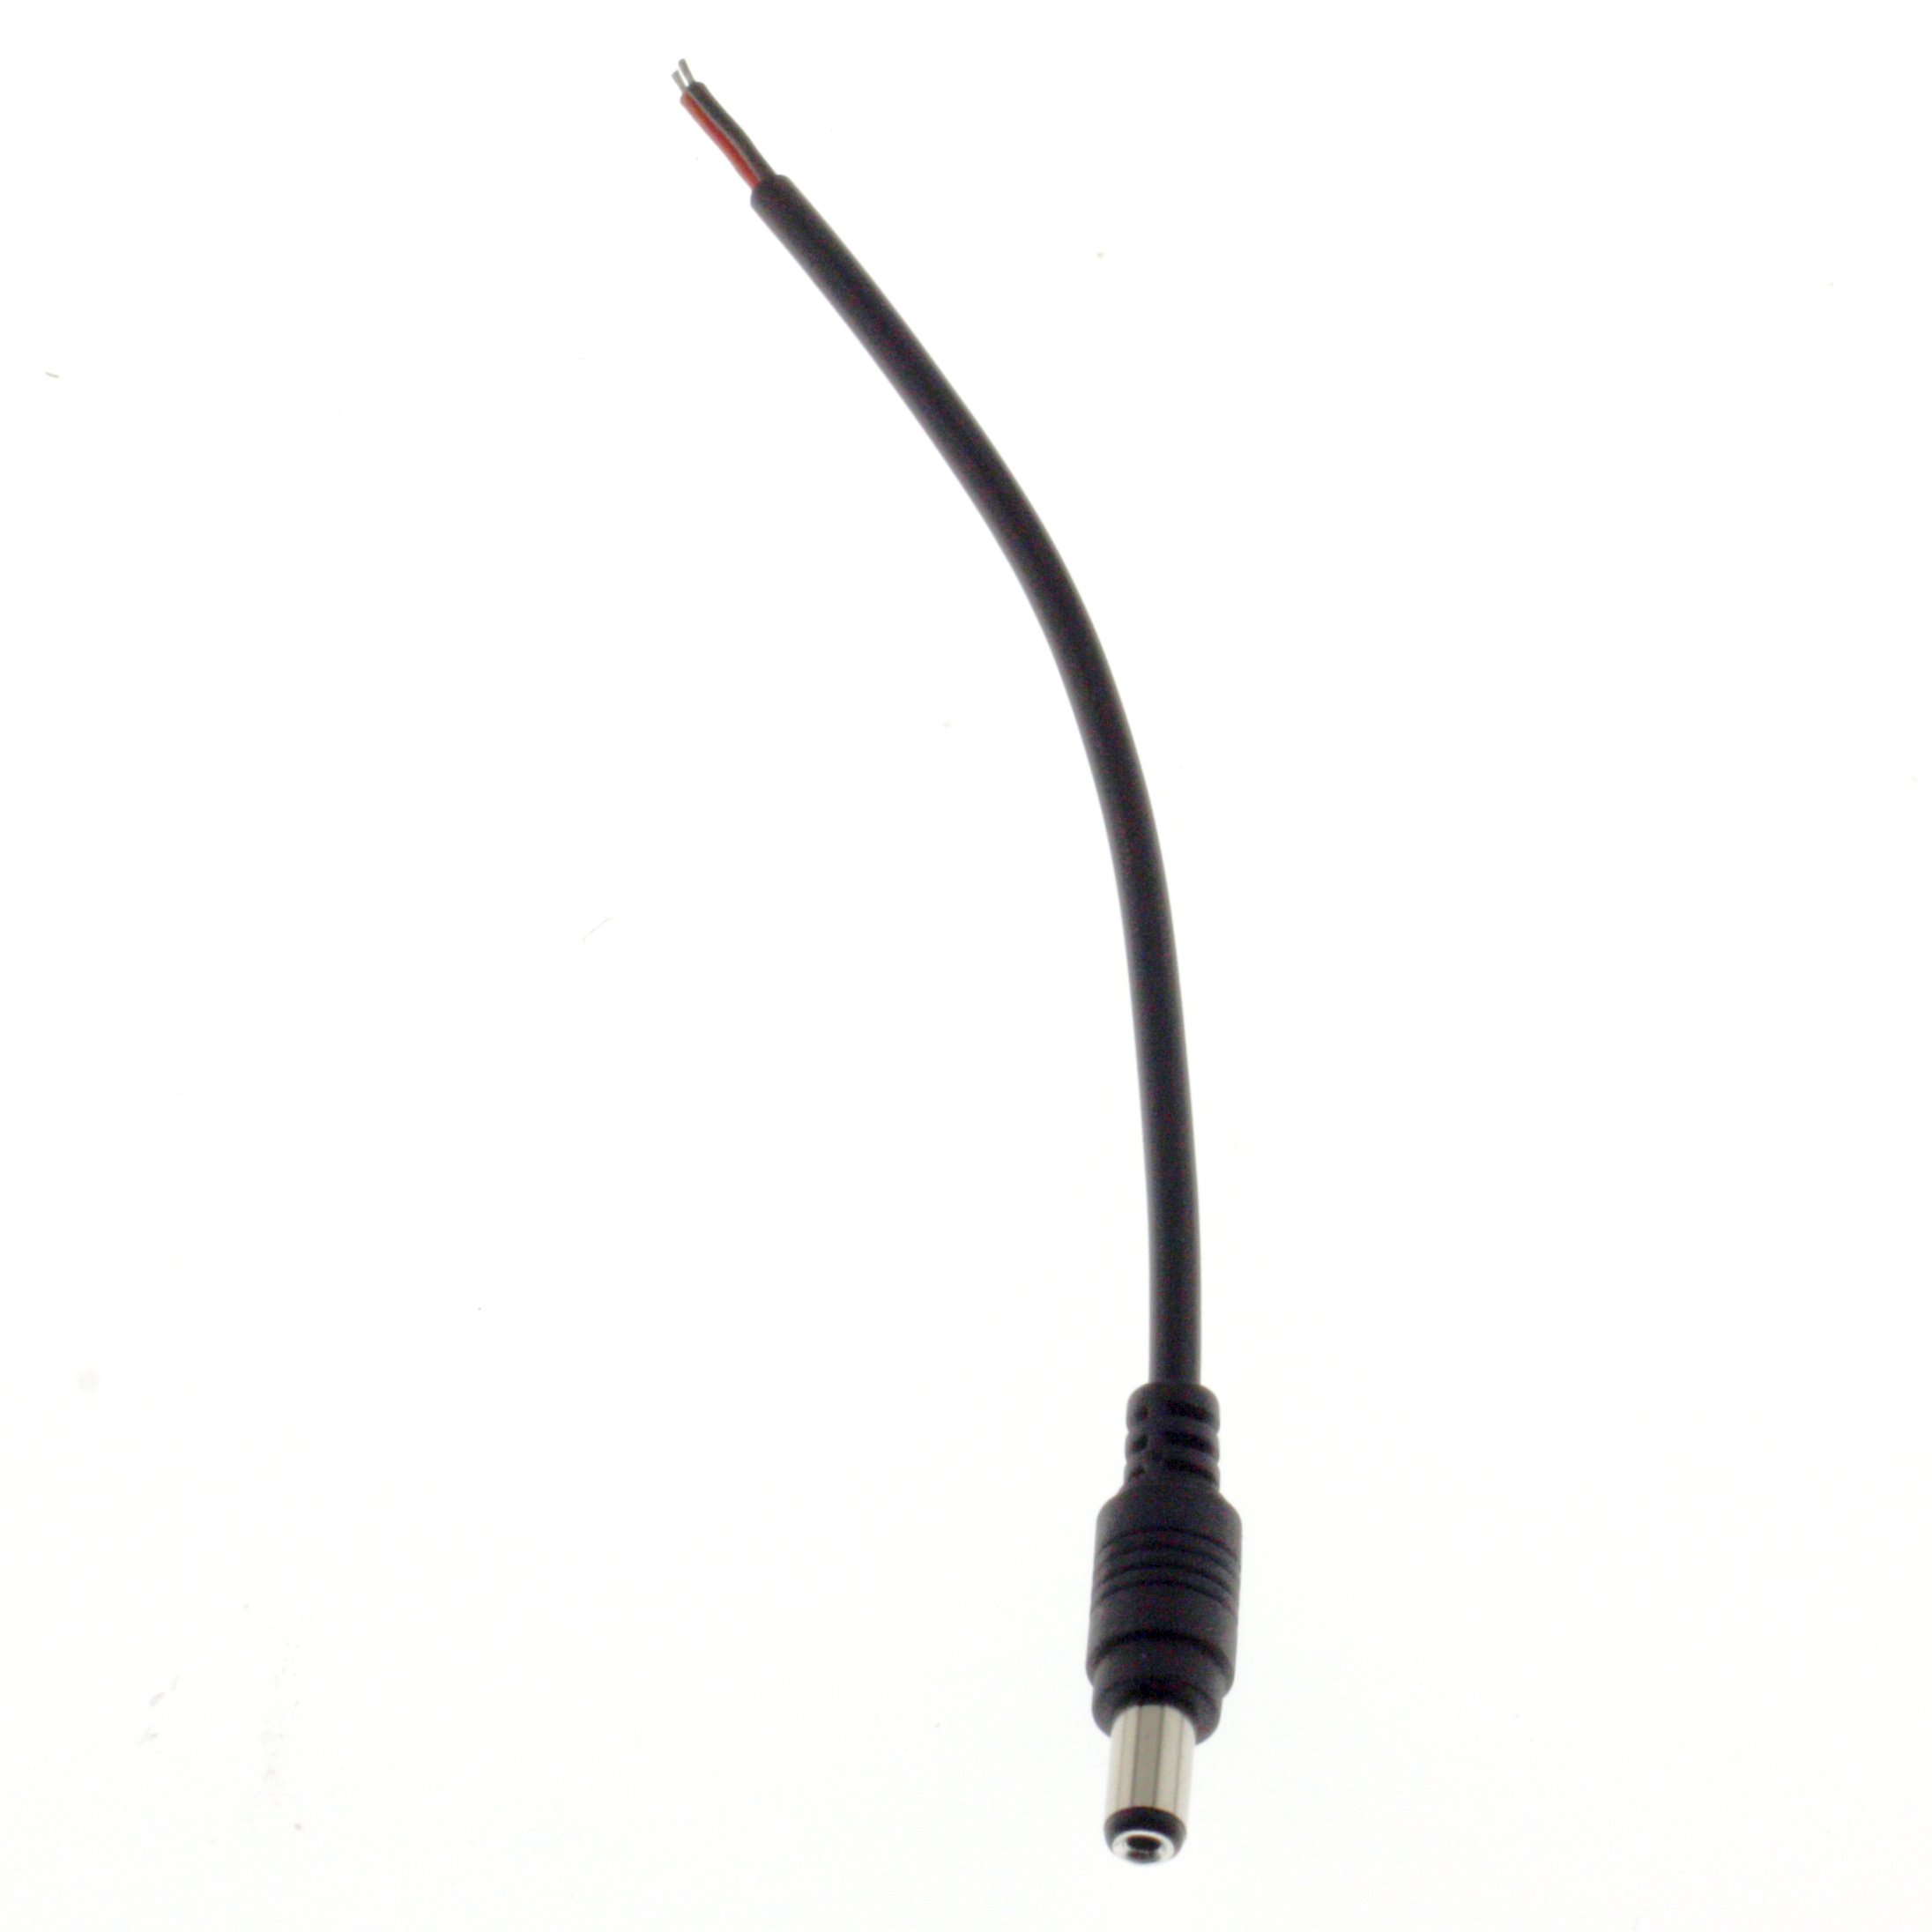 Adaptor dc plug 5,5x2,1 to wire